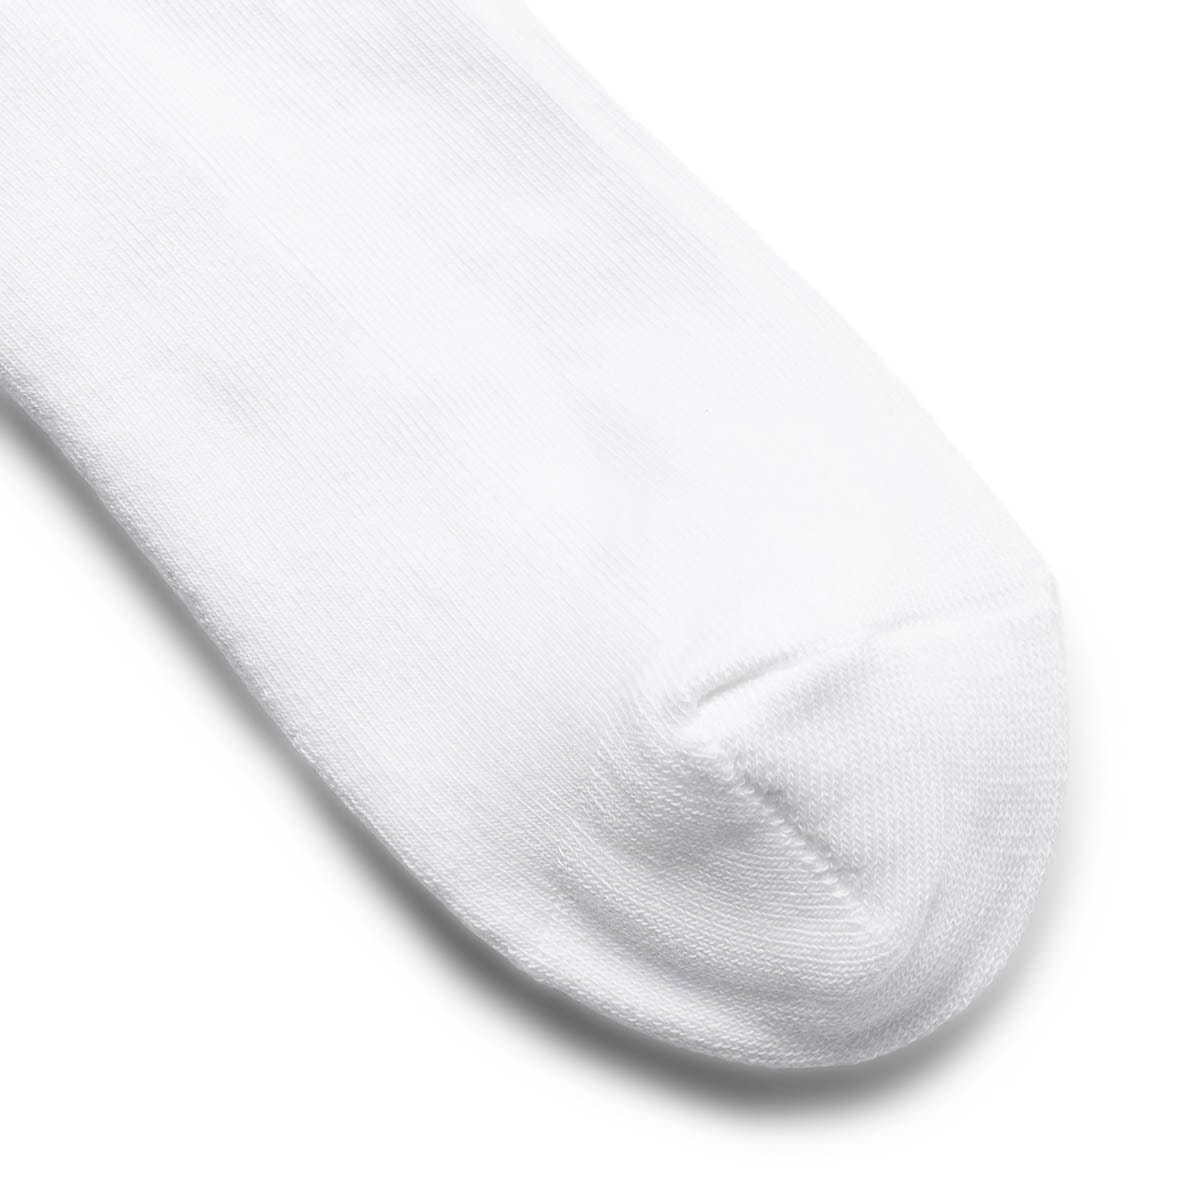 Sky High Farm Workwear Socks WHITE / O/S QUIL LEMONS FARM SOCKS